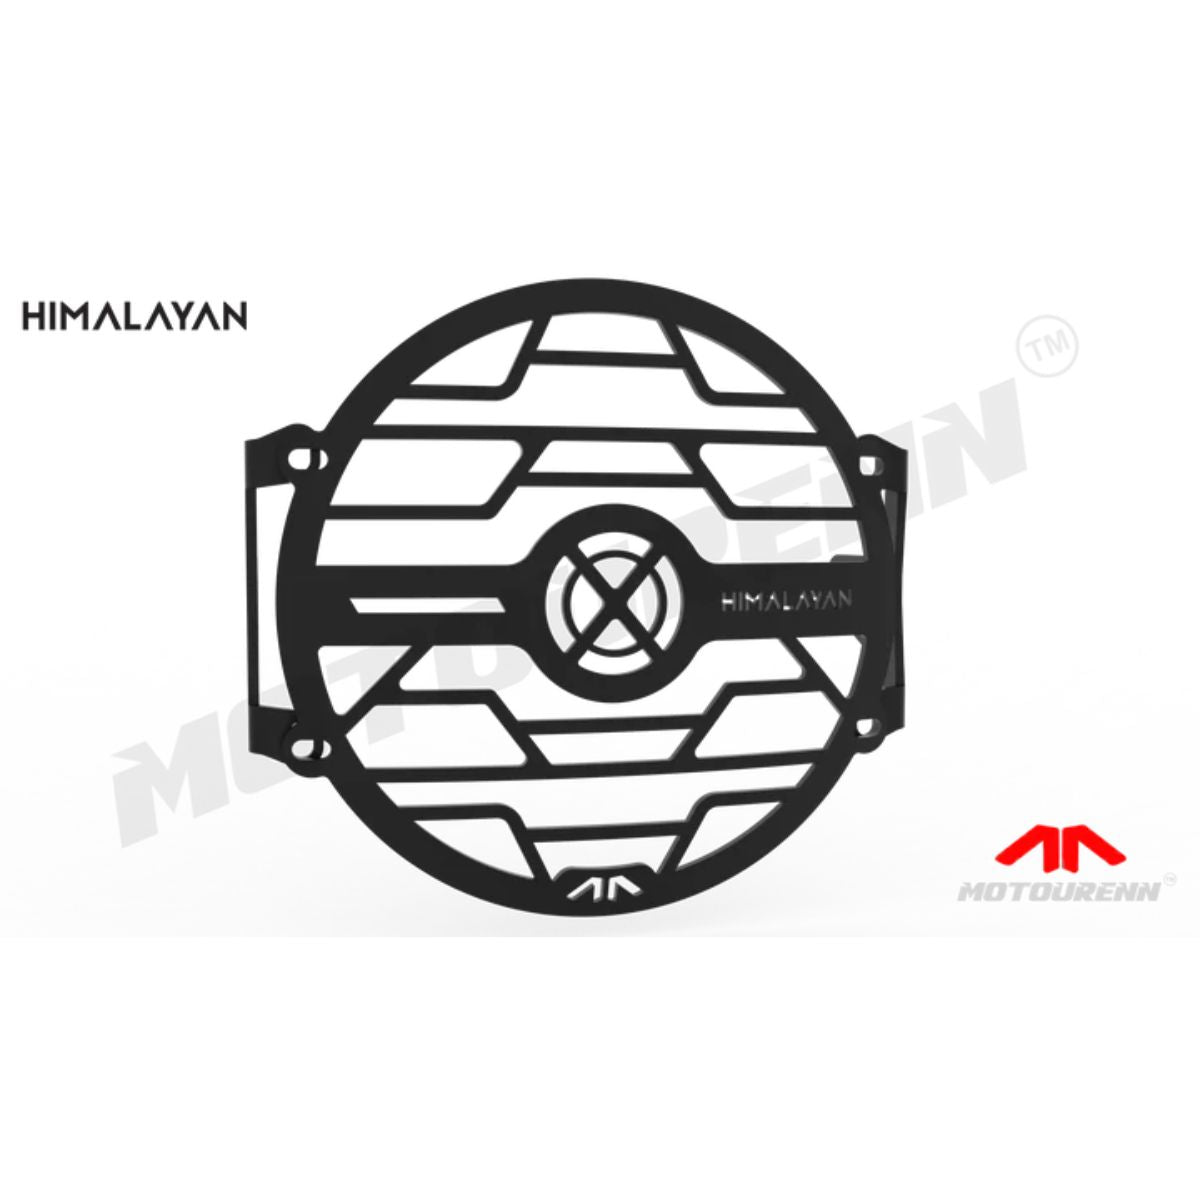 RE Himalayan 450 Headlight Grill - Type 1 3